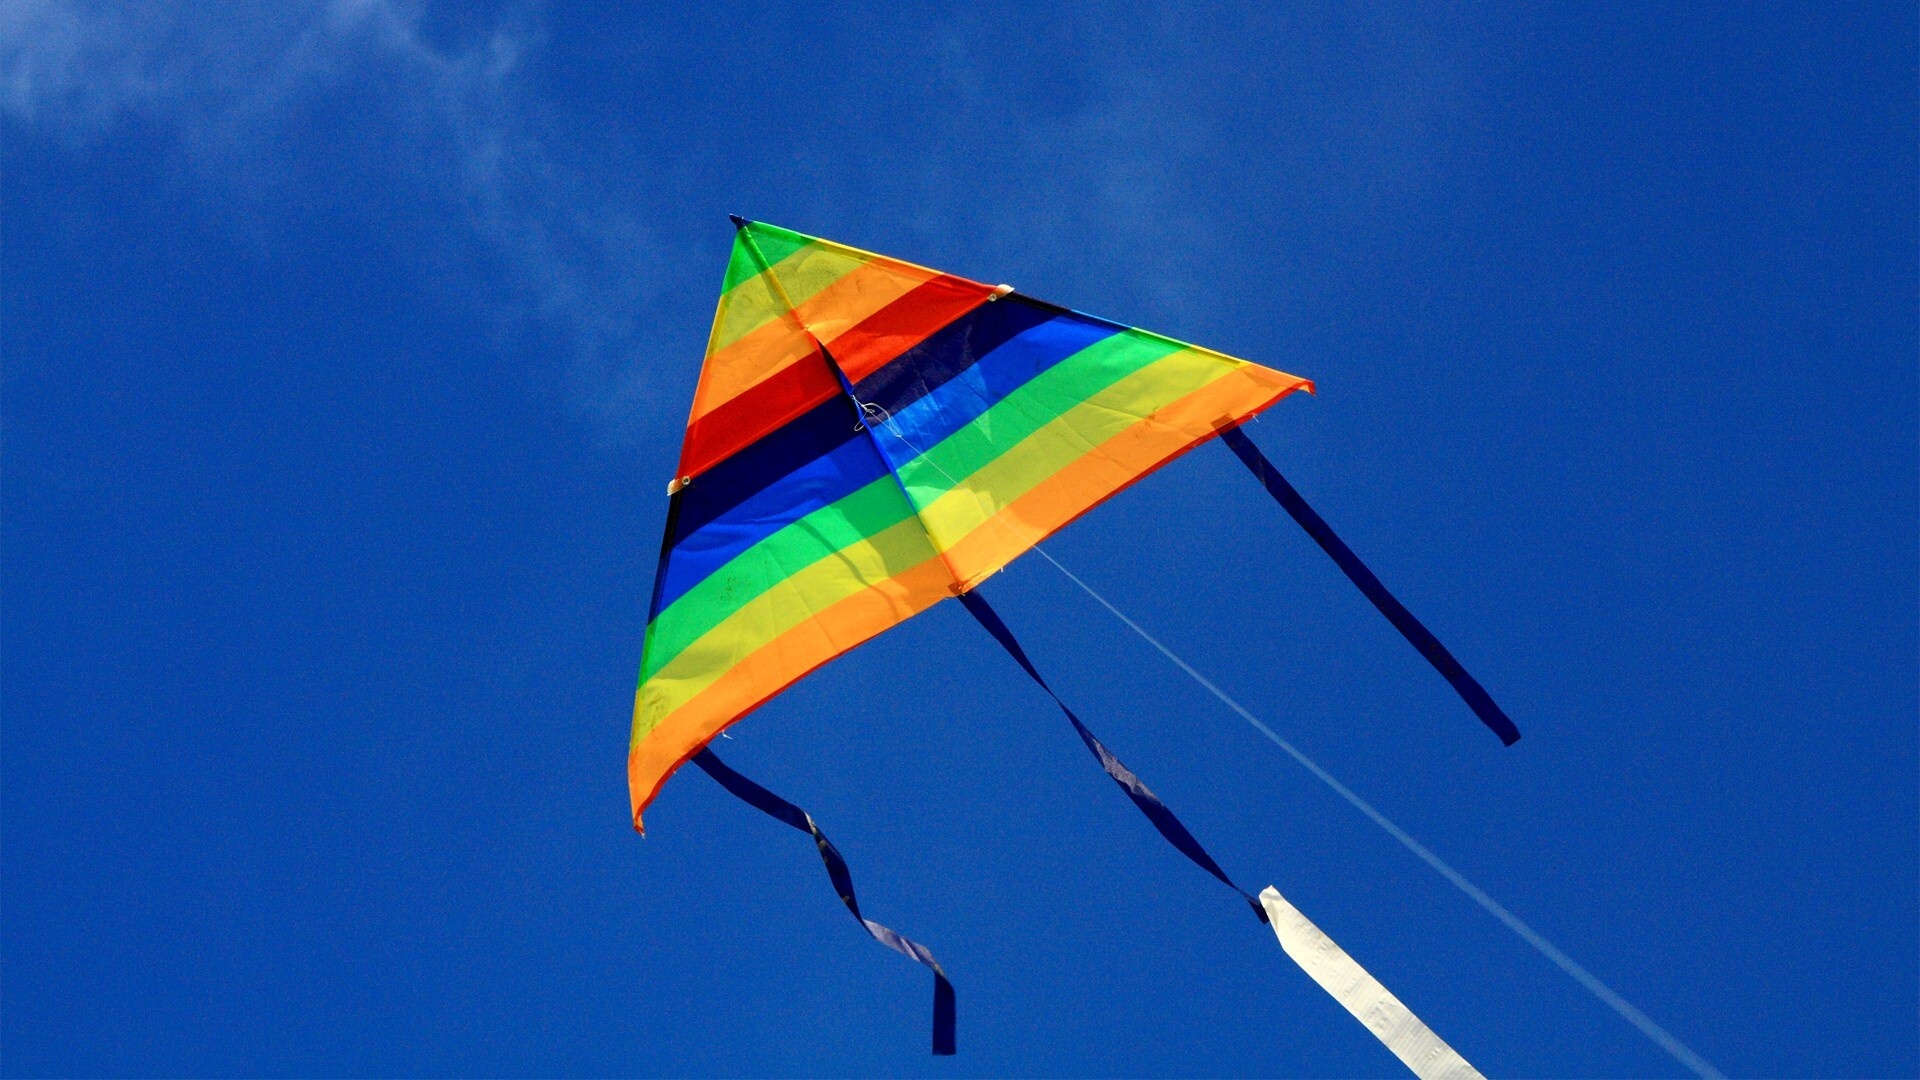 Kite Sports: Delta rainbow kite, Versatile design, Towing point, Blue sky. 1920x1080 Full HD Background.